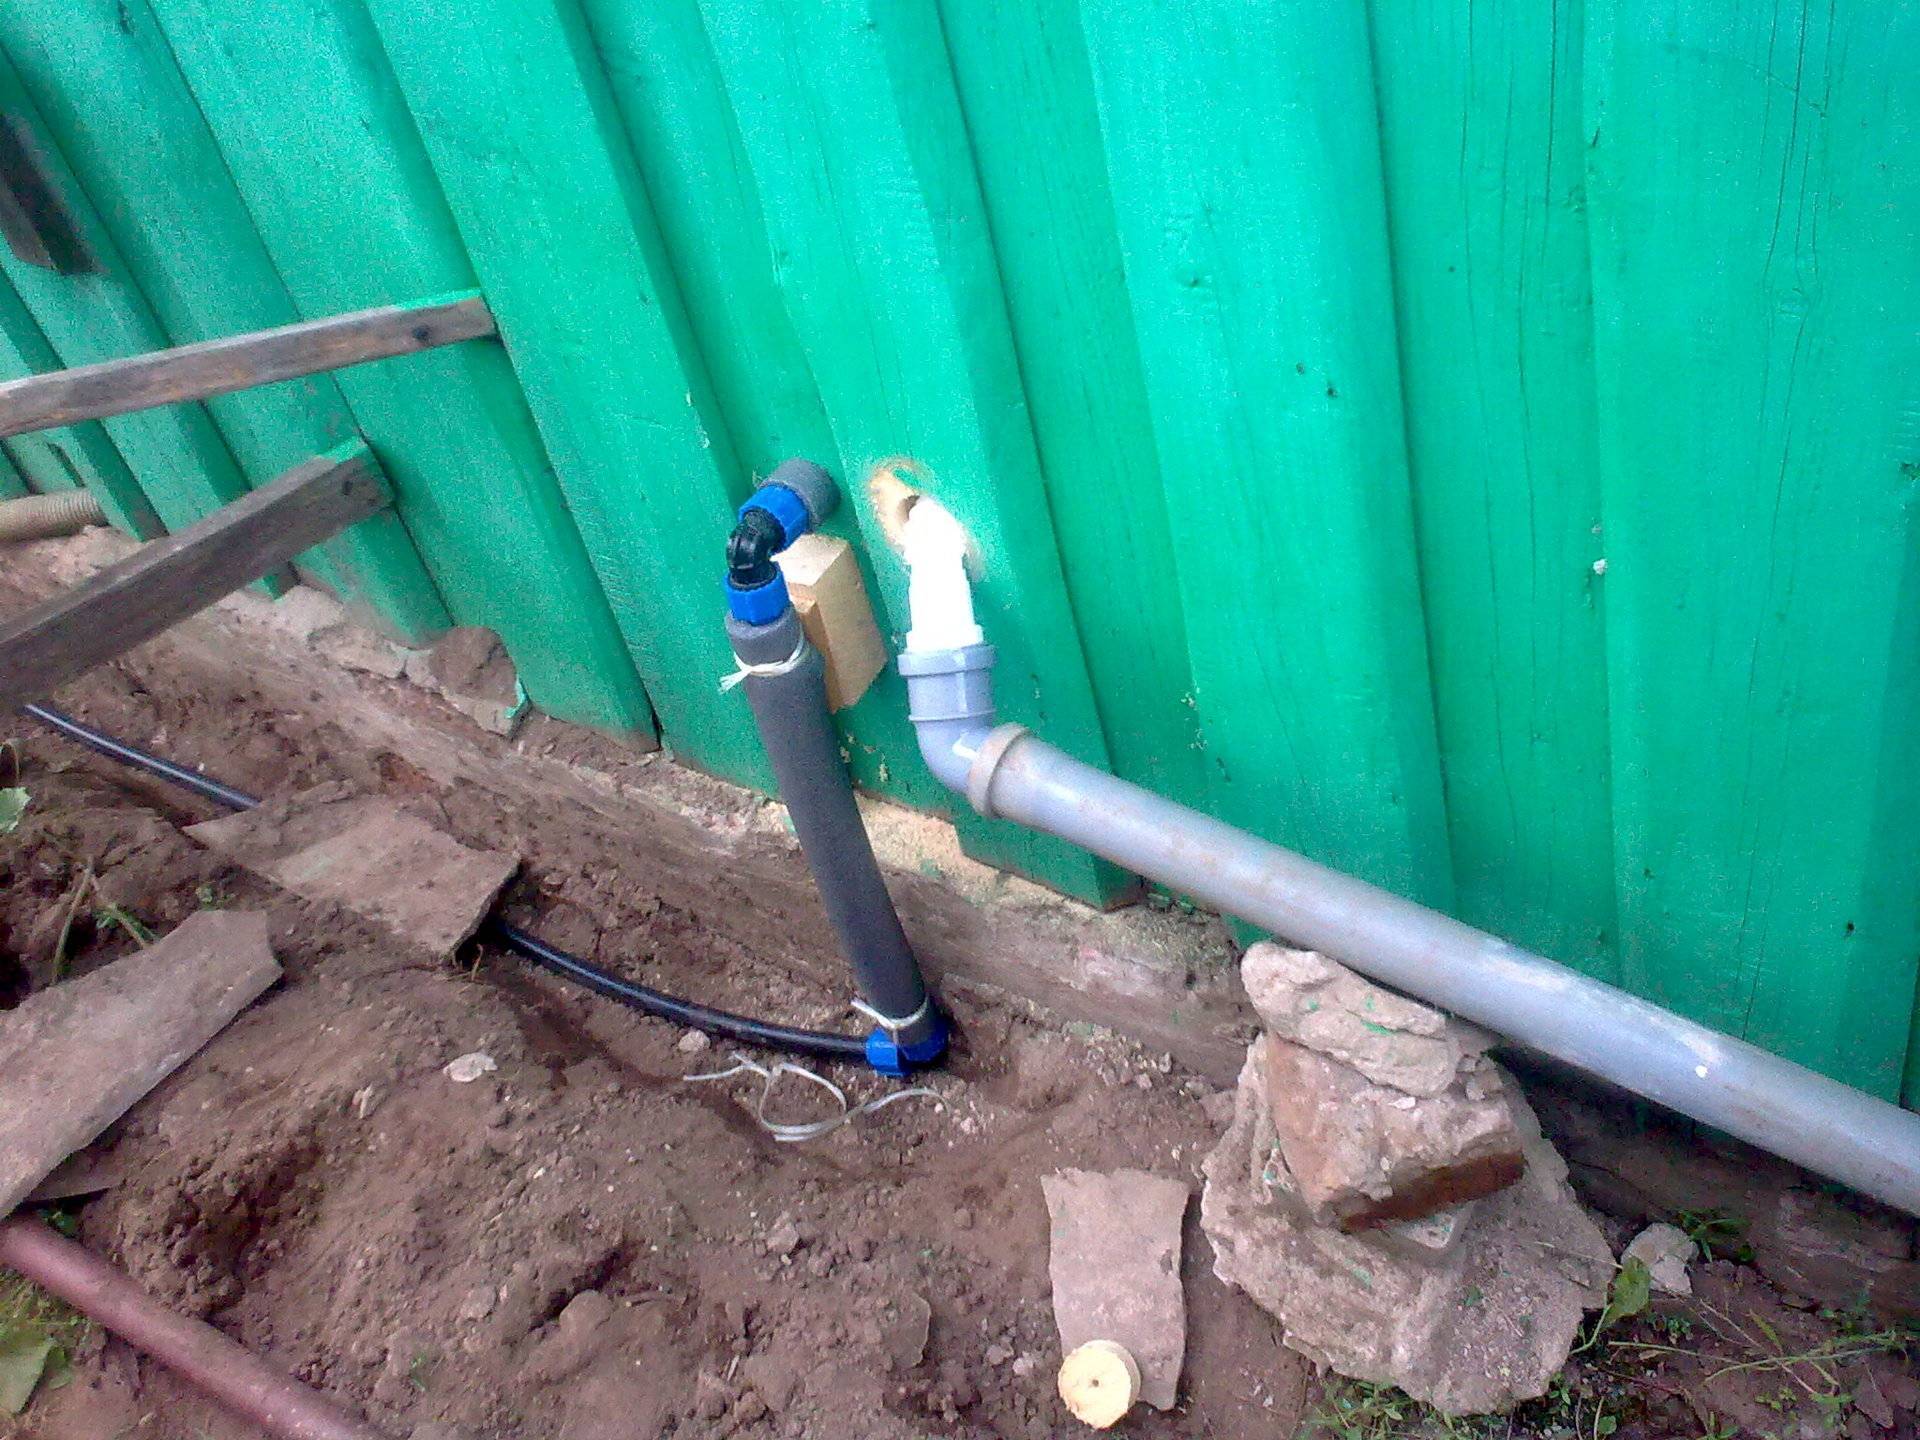 Водопровод на даче своими руками - строительство и ремонт